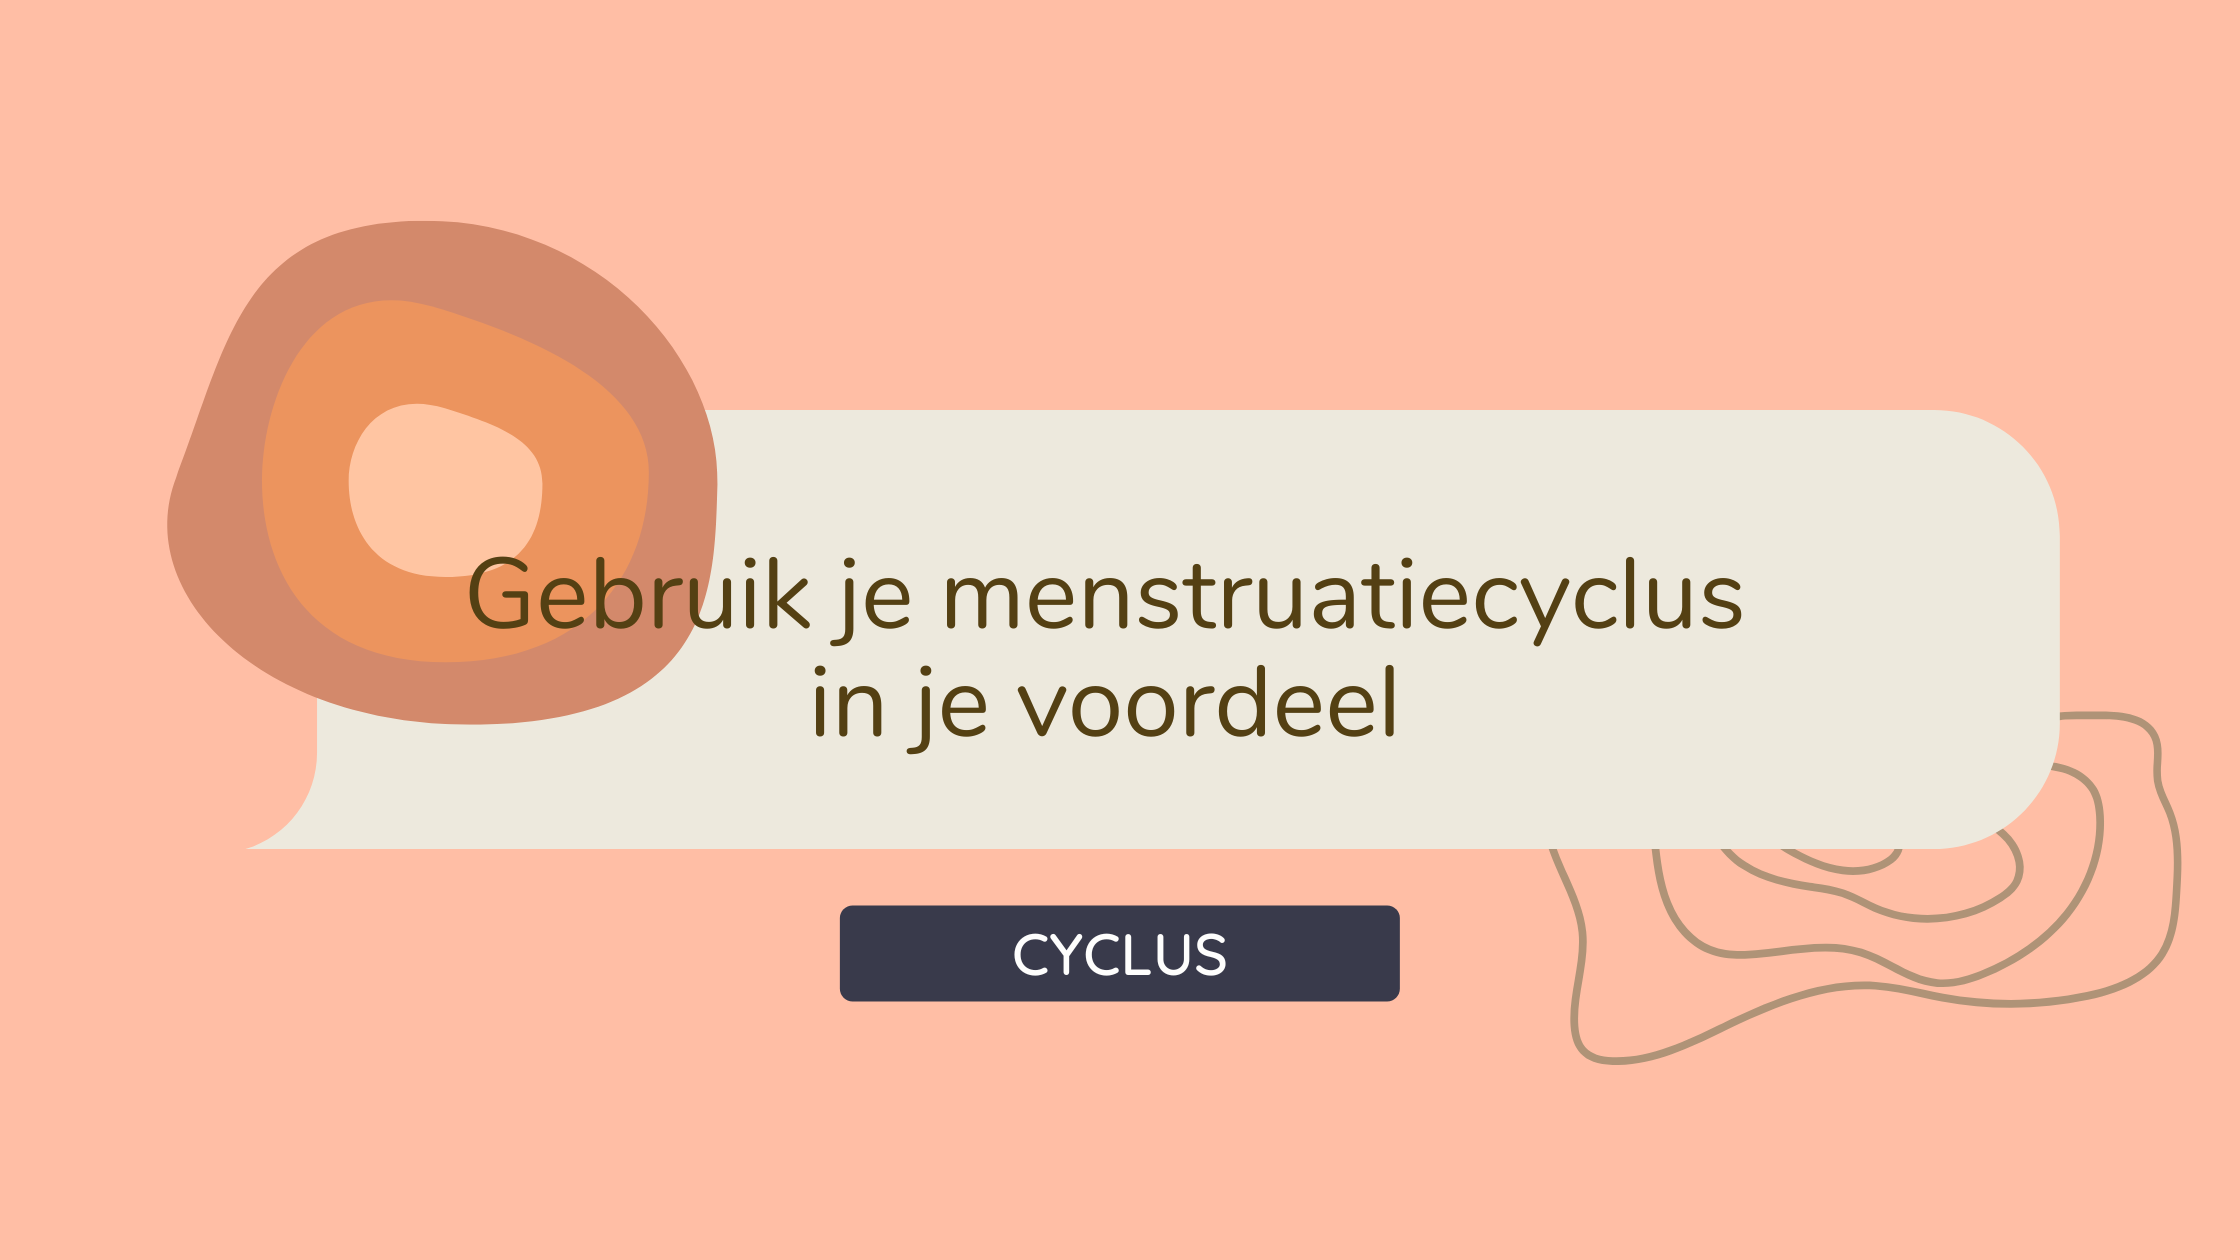 Menstruatiecyclus